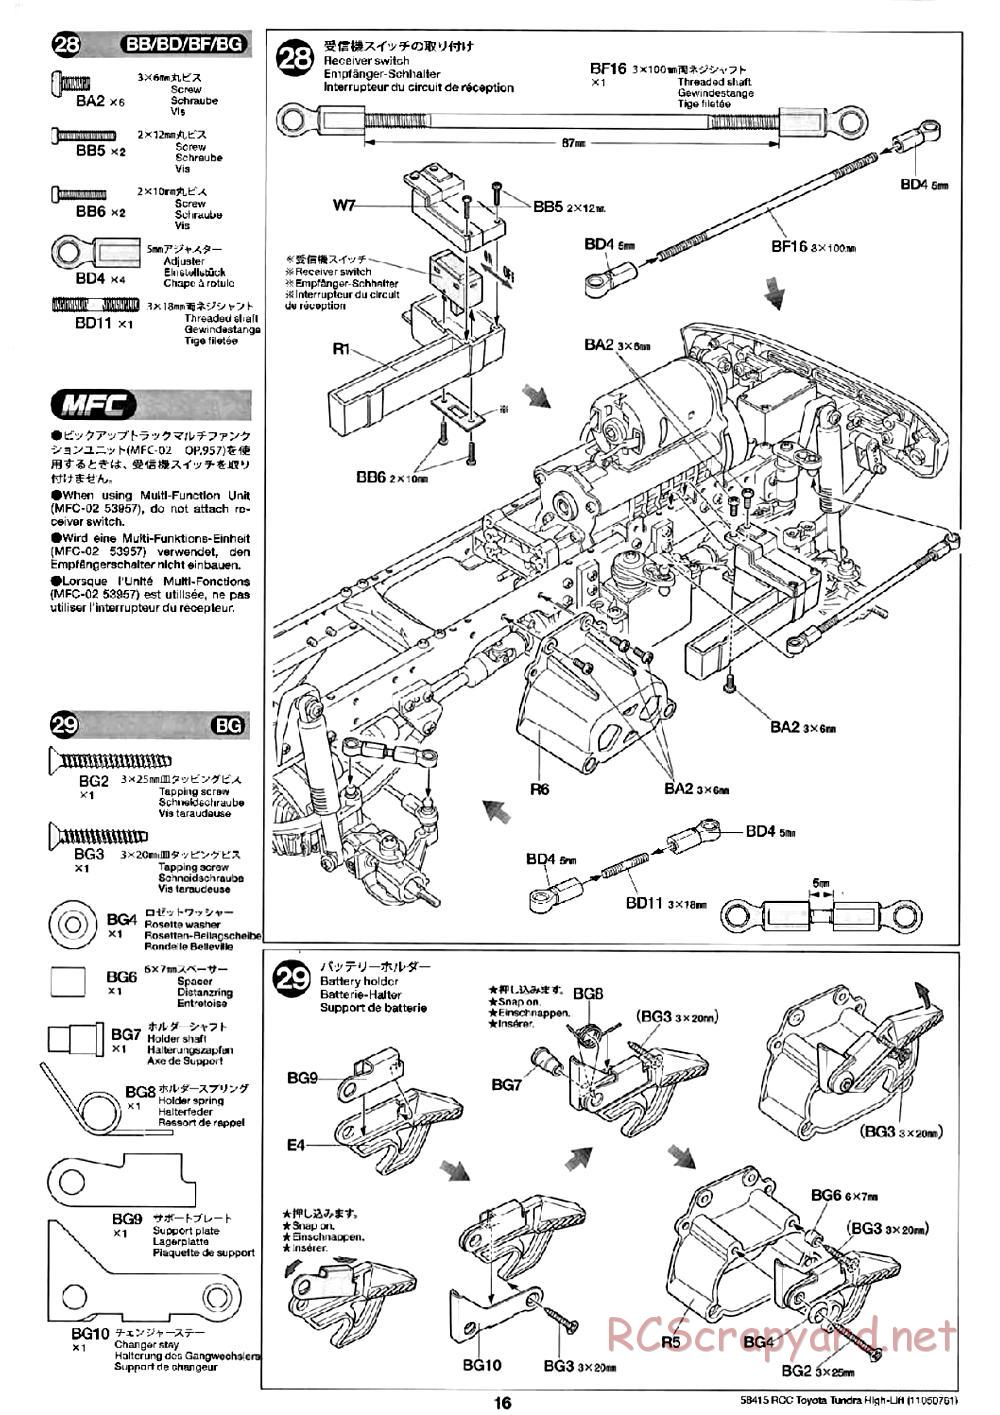 Tamiya - Toyota Tundra High-Lift Chassis - Manual - Page 16